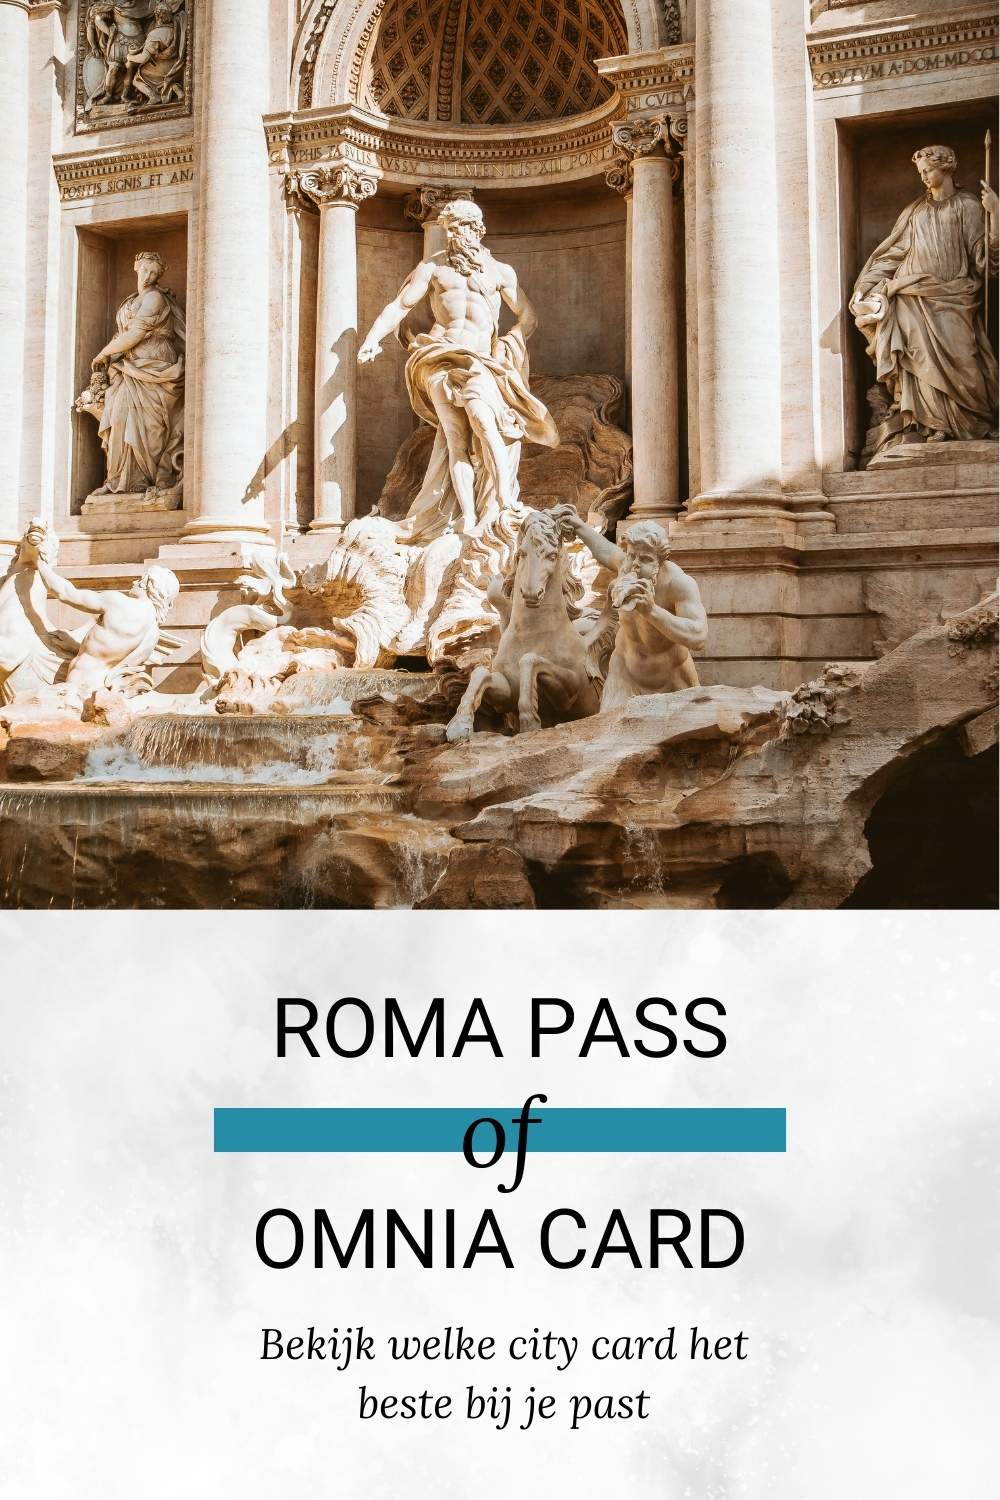 Roma pass of Omia Card: vergelijk de stadspassen van Rome | Mooistestedentrips.nl